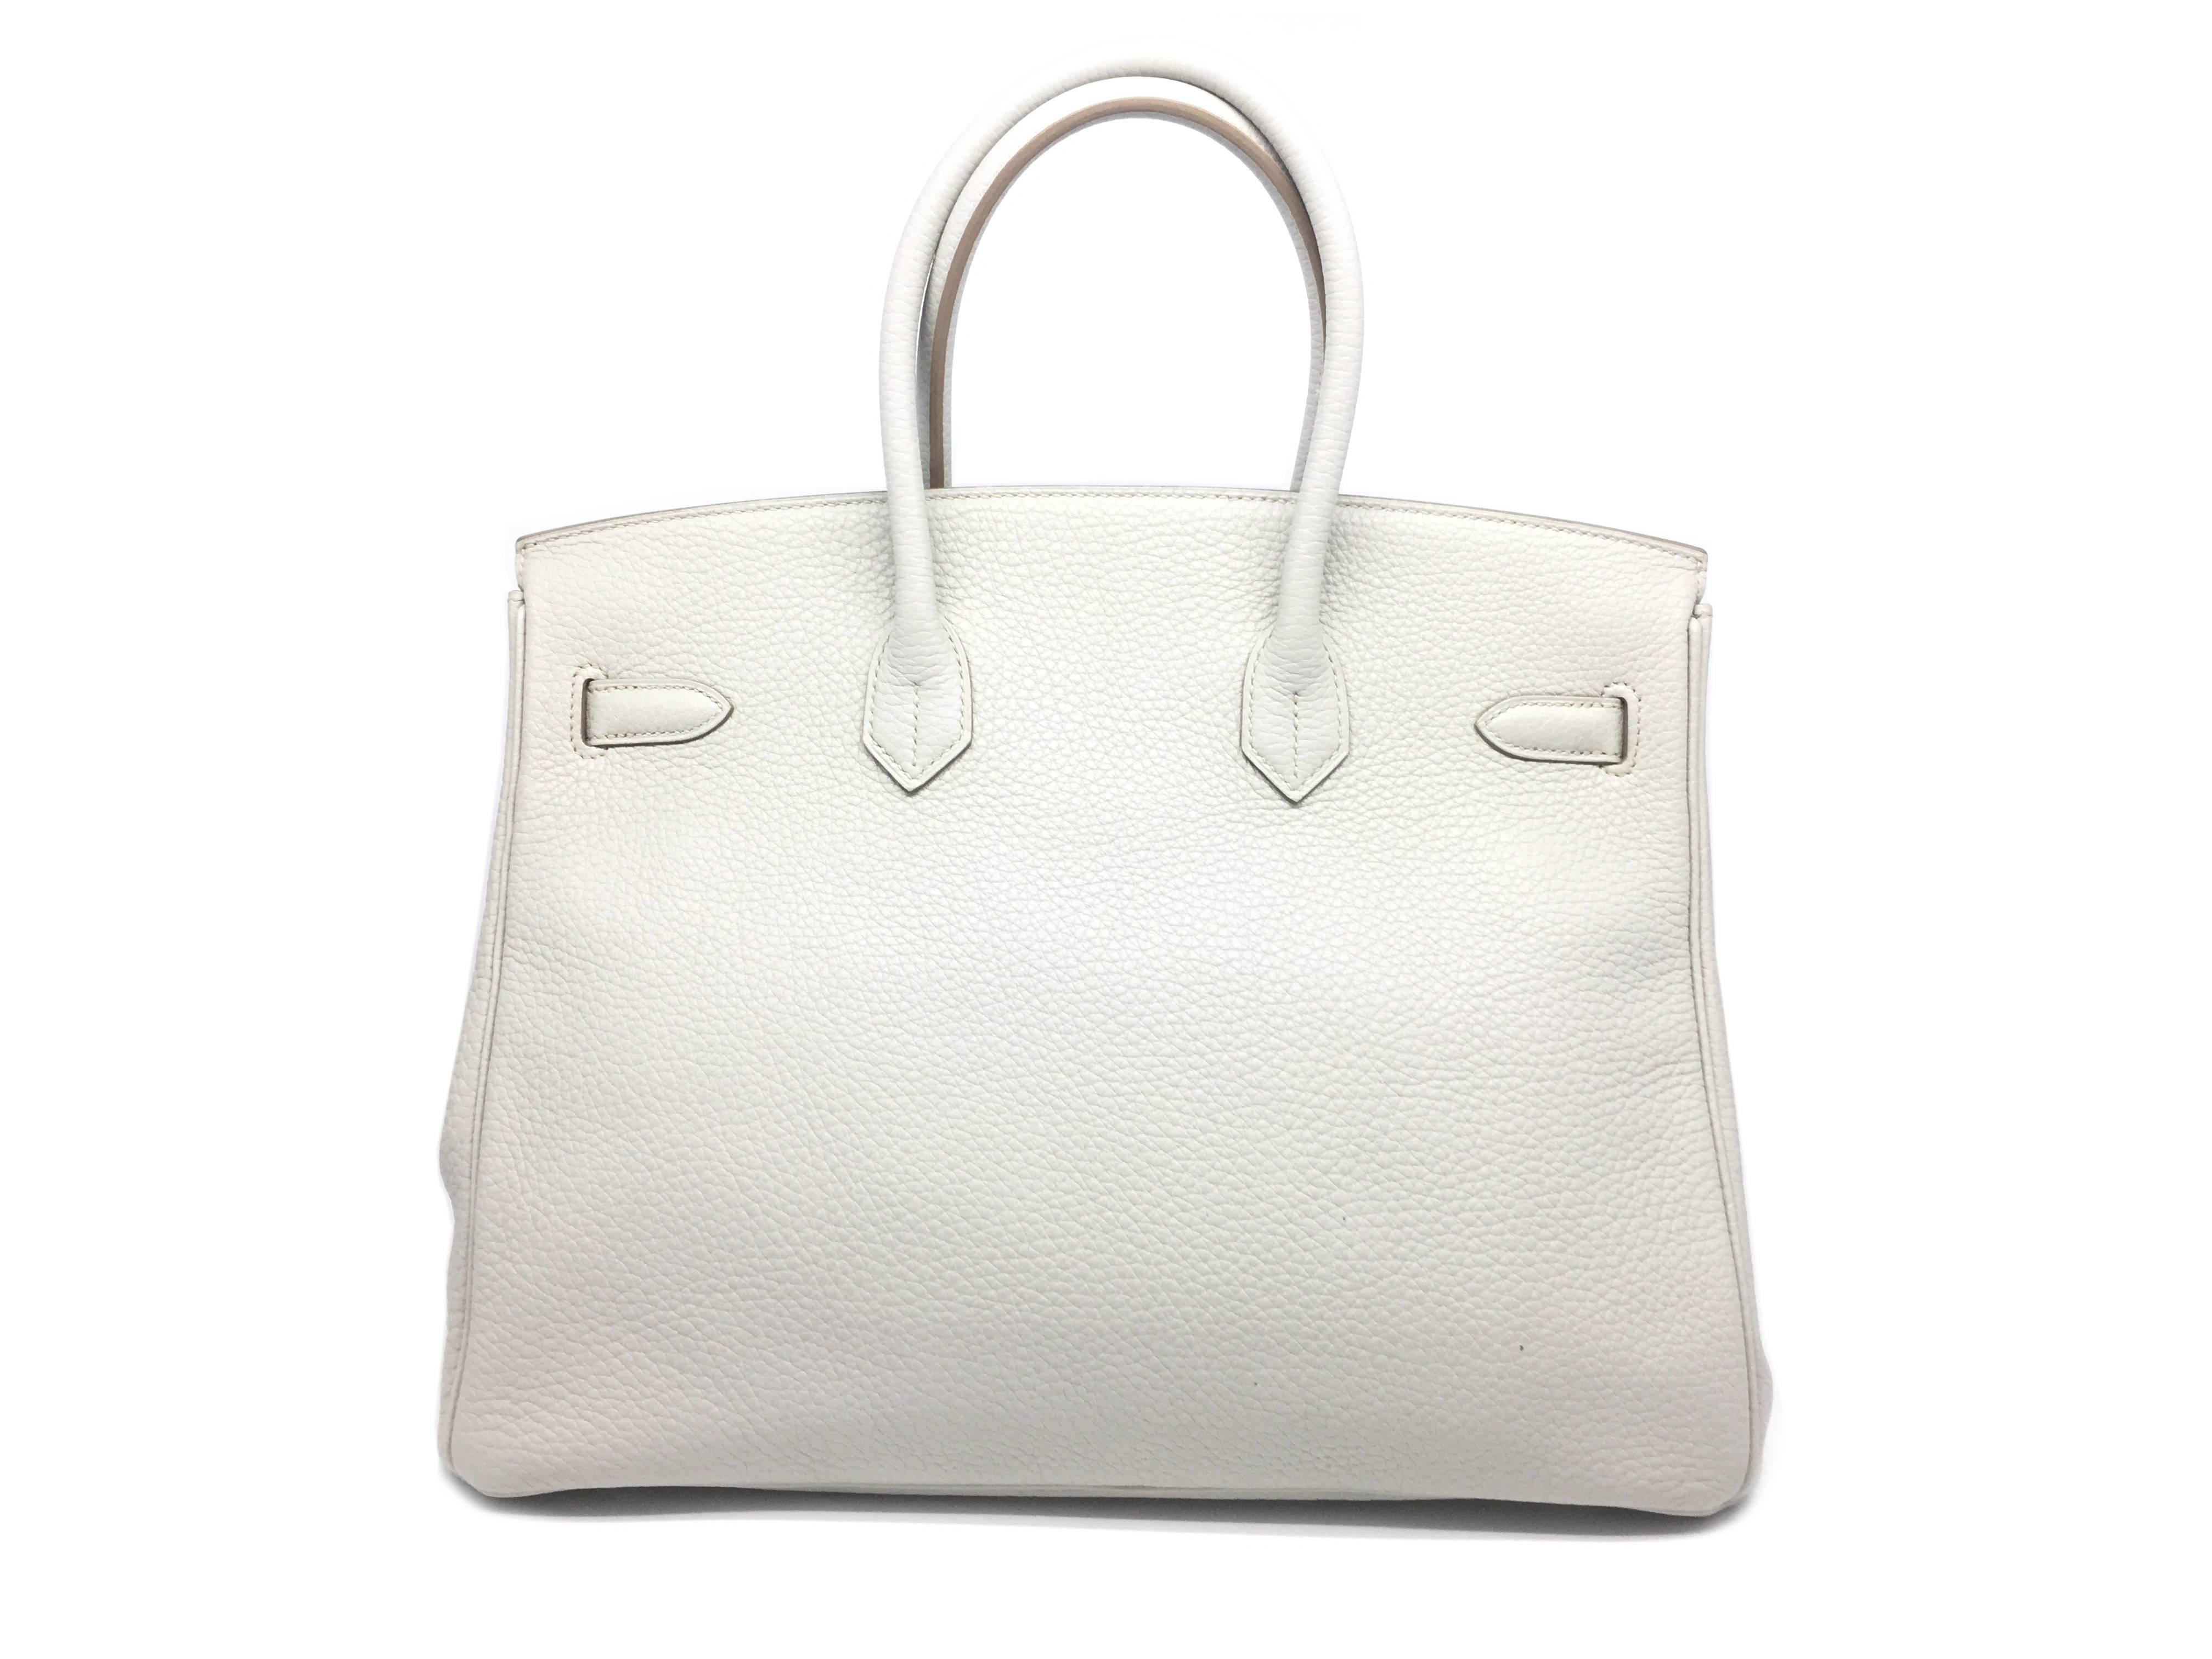 Gray Hermes Birkin 35 Gris Perle Togo Leather SHW Top Handle Bag